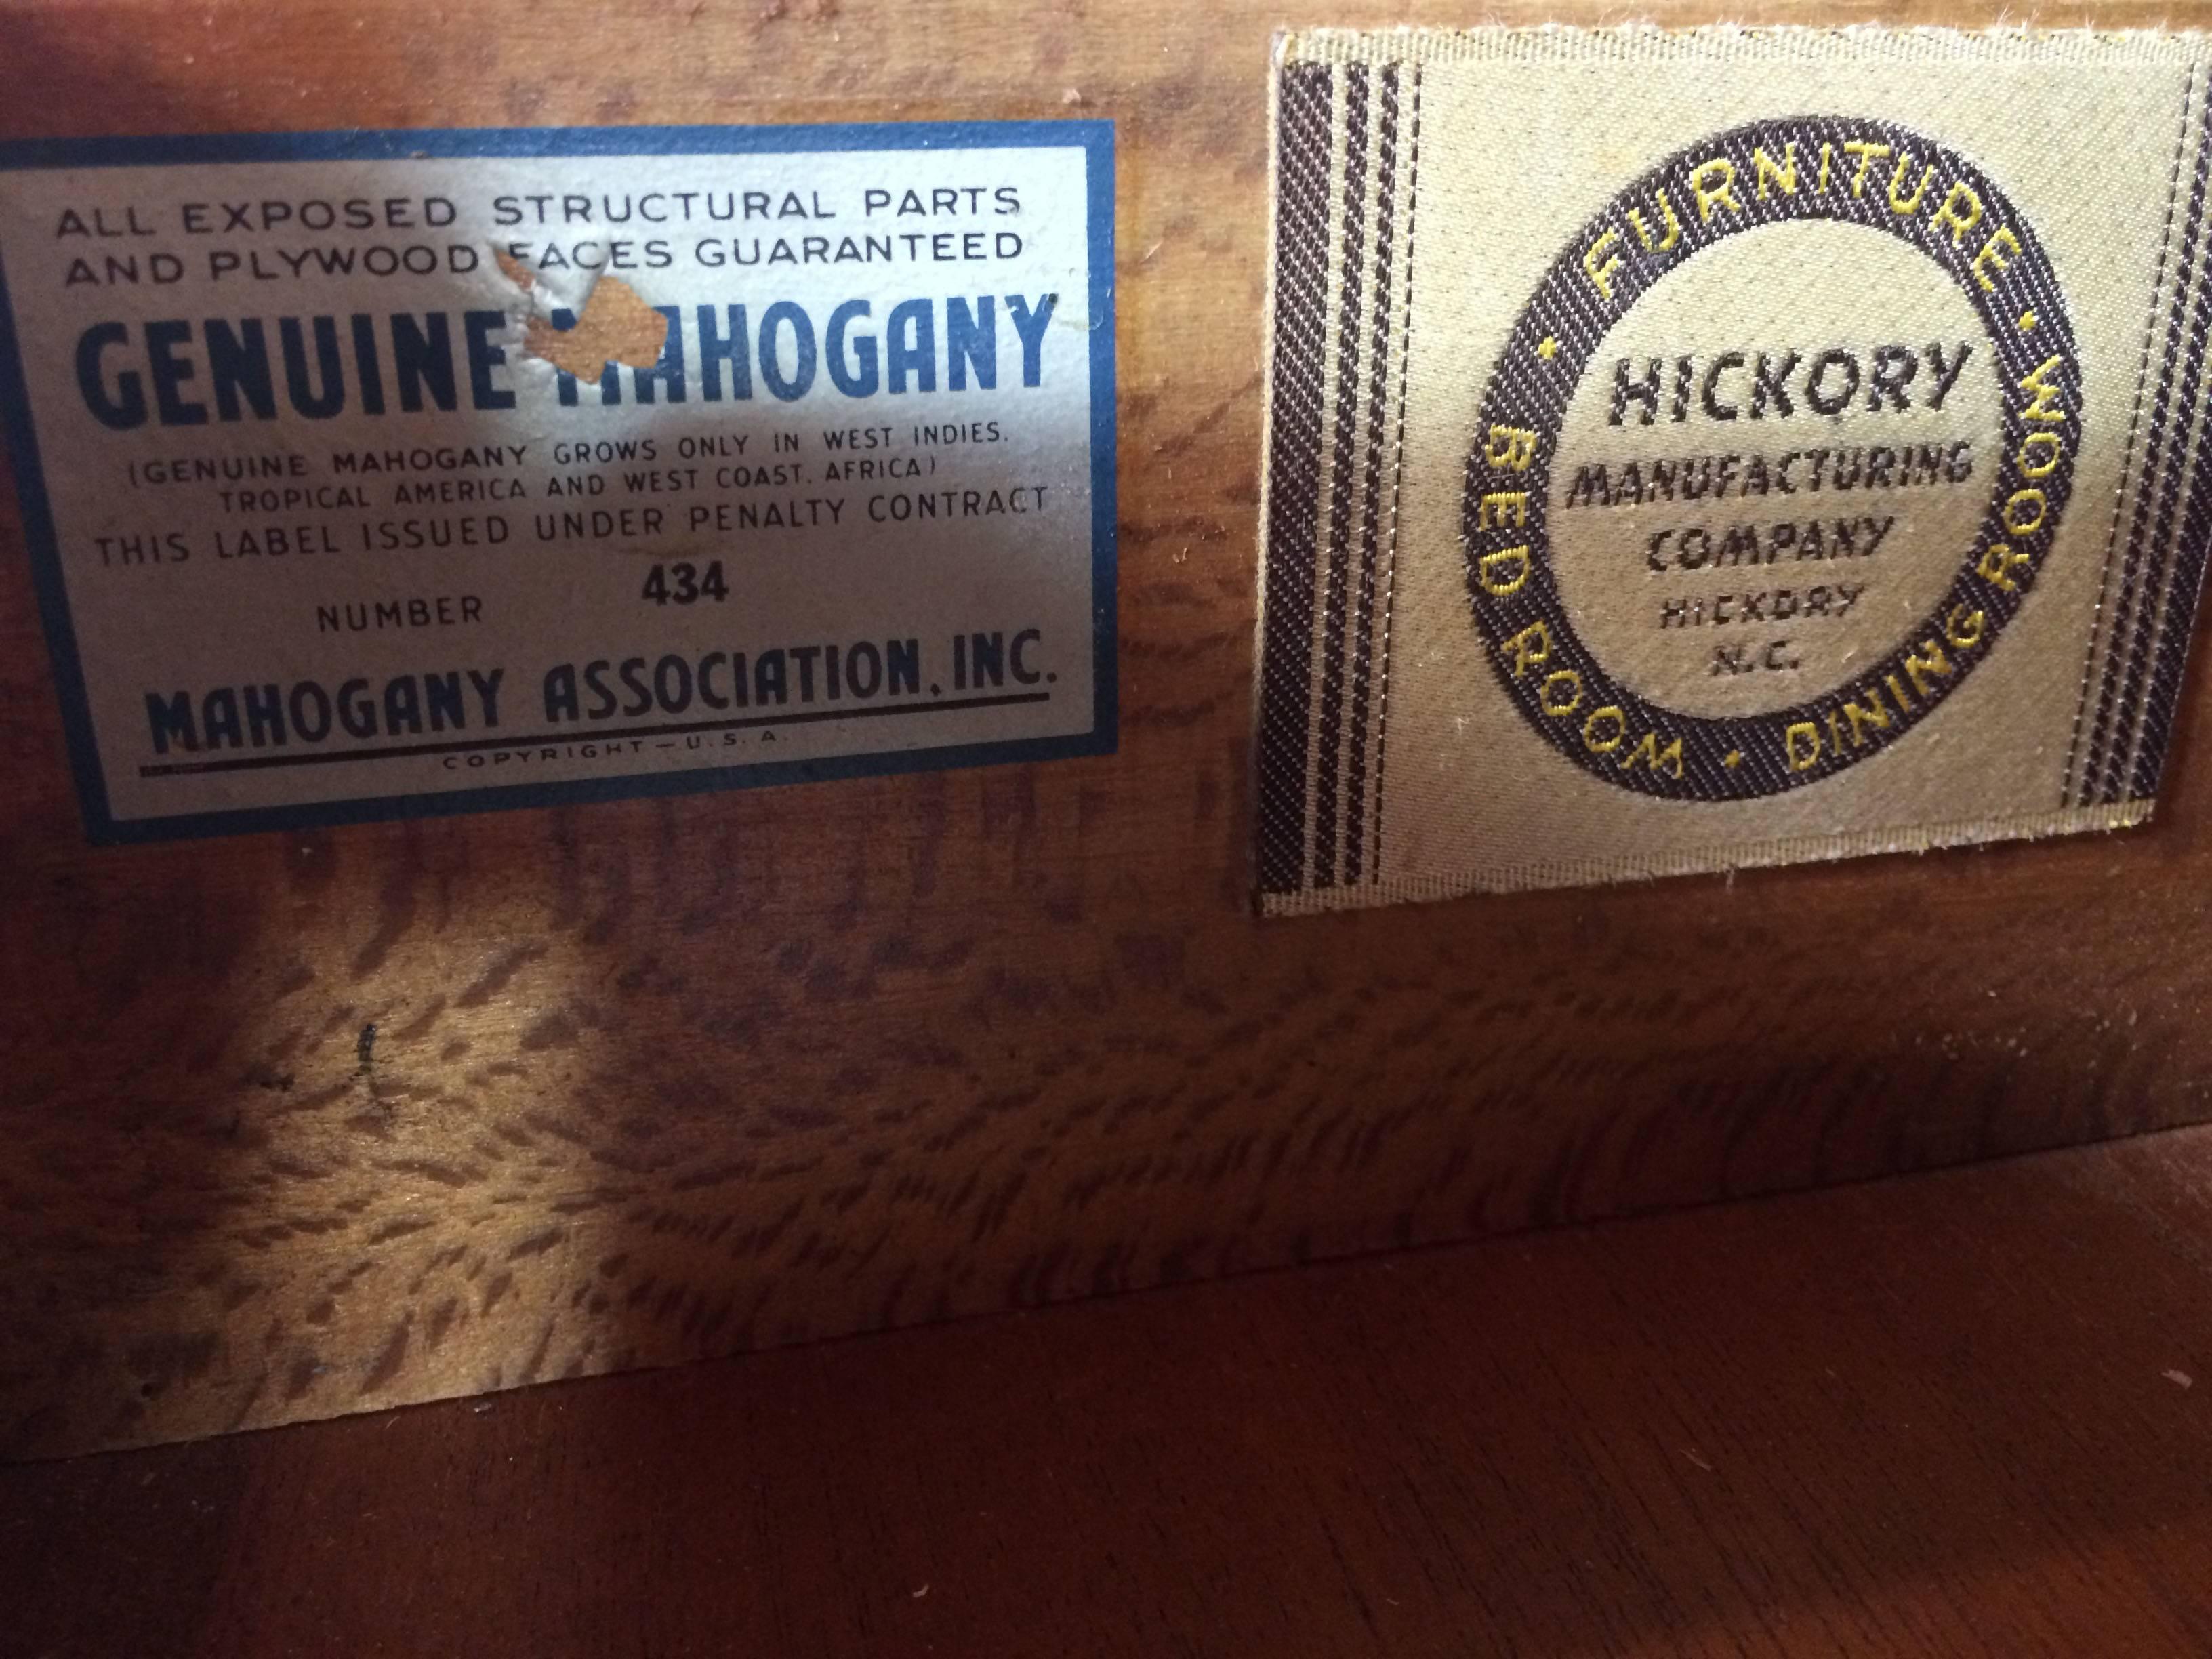 Mid-Century Modern Mid -Century Mahogany Credenza by Hickory Manufacturing Company